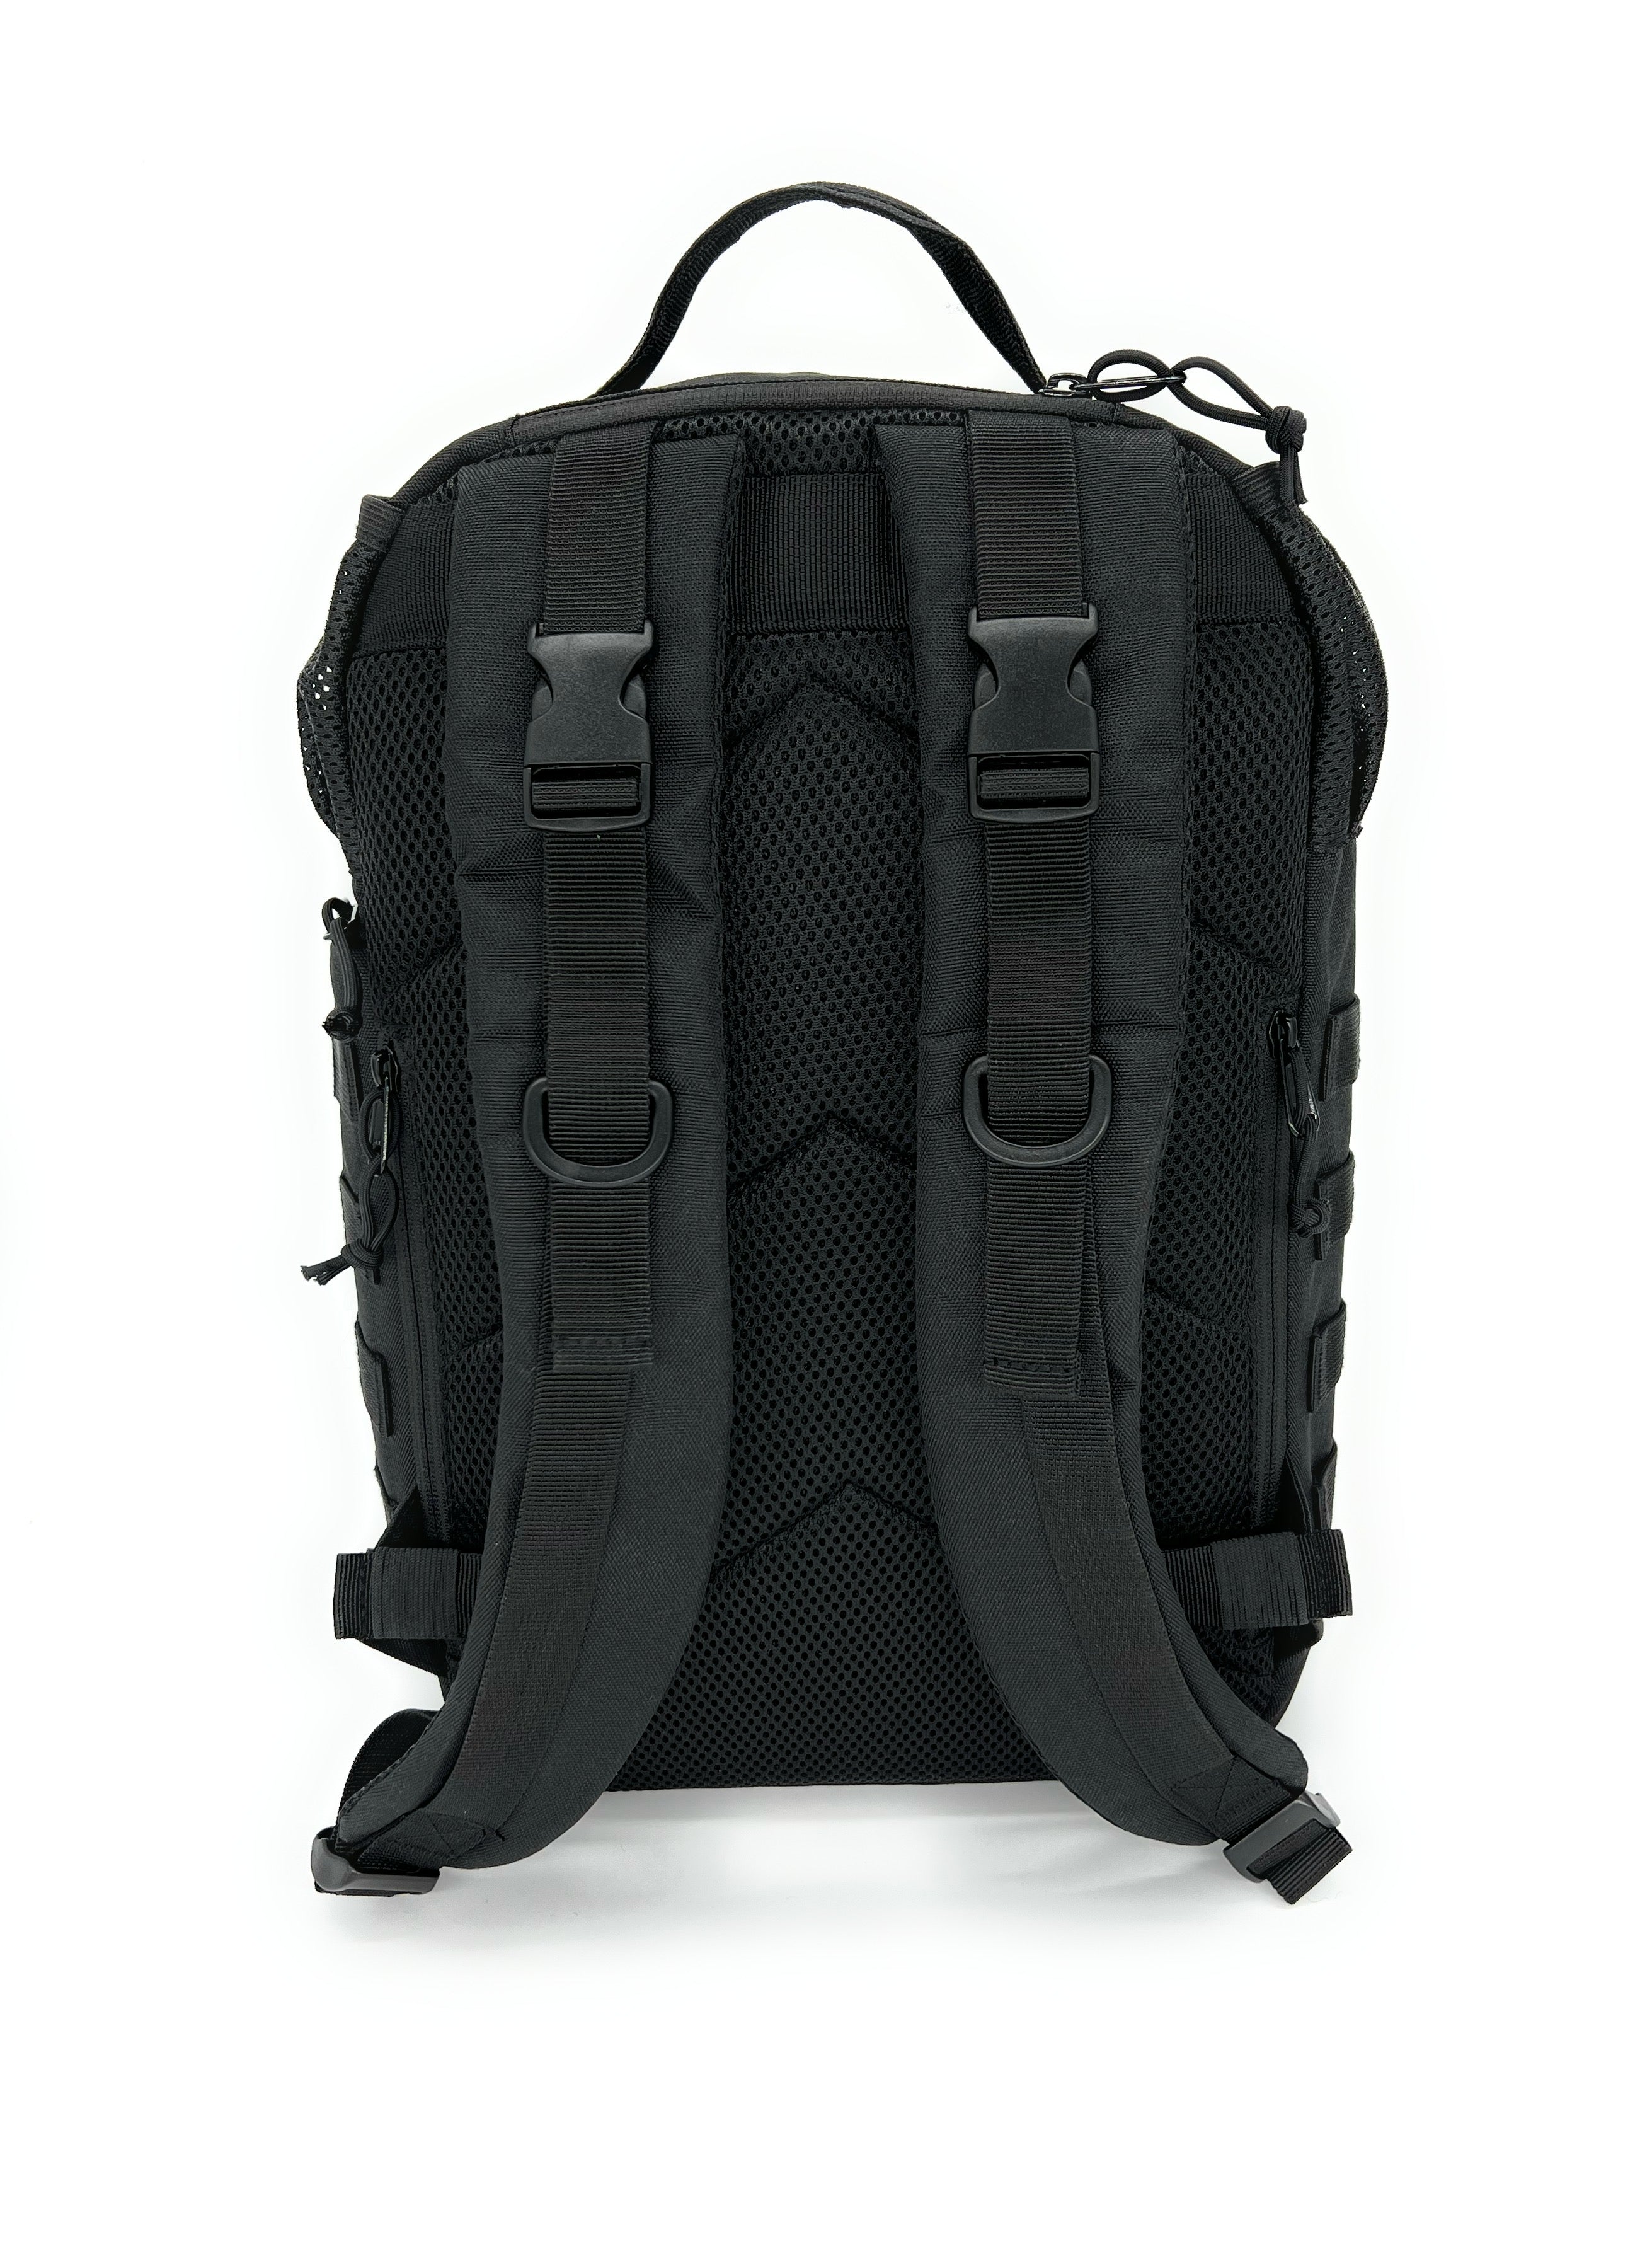 HSD High Speed Daddy Durable Diaper Bag Backpack HSD001B Black